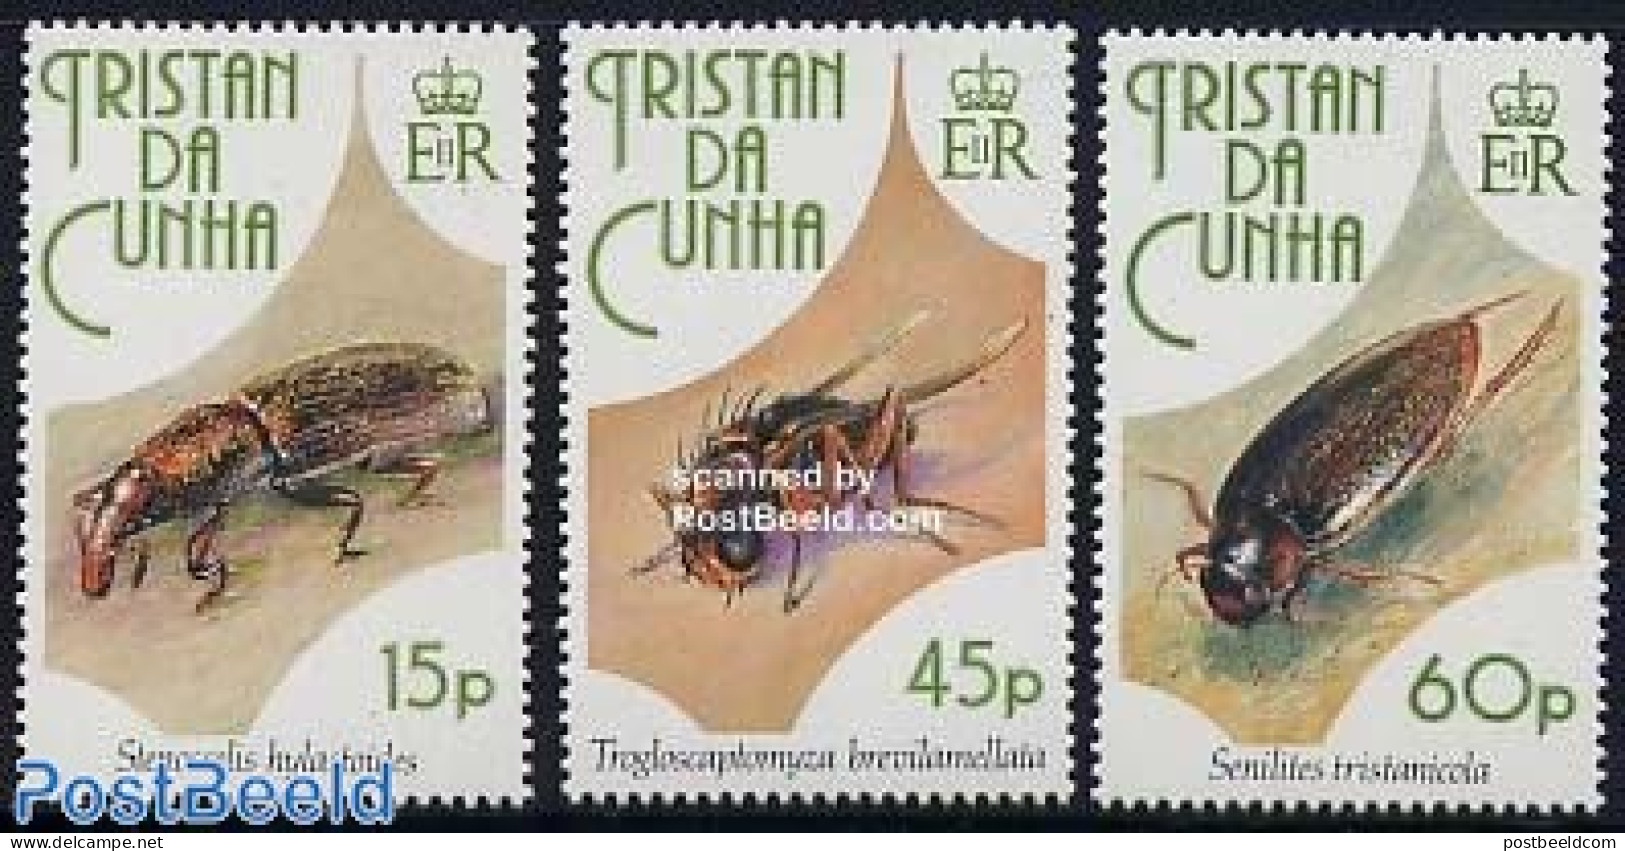 Tristan Da Cunha 1993 Insects 3v, Mint NH, Nature - Insects - Tristan Da Cunha